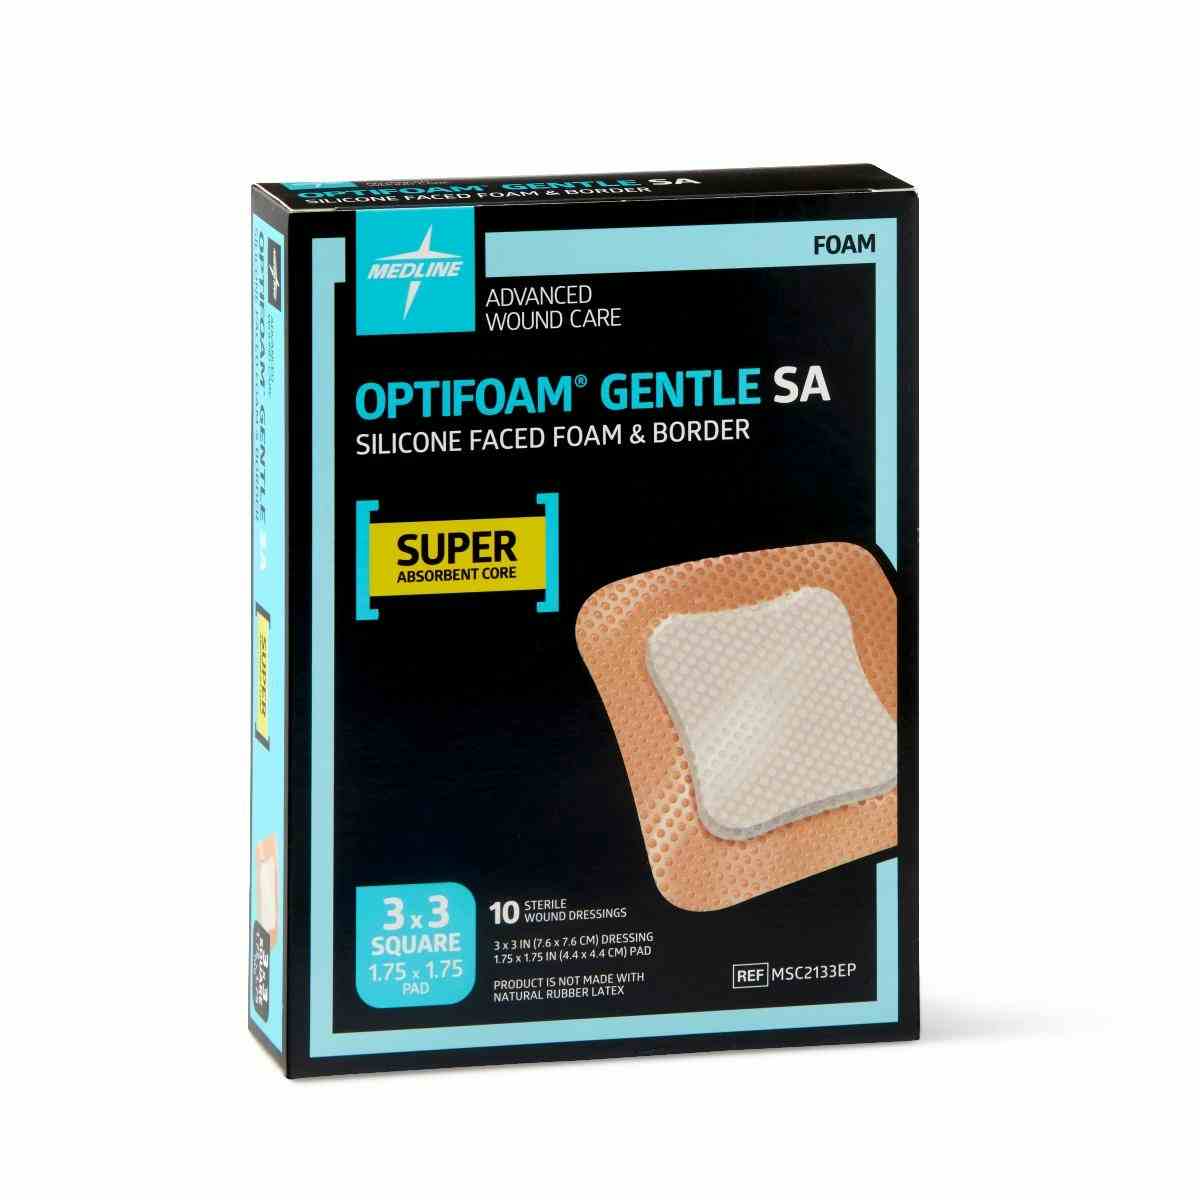 Optifoam Gentle SA Silicone-Faced Foam Dressing, MSC2133EPZ, 3 X 3 Inches - Box of 10